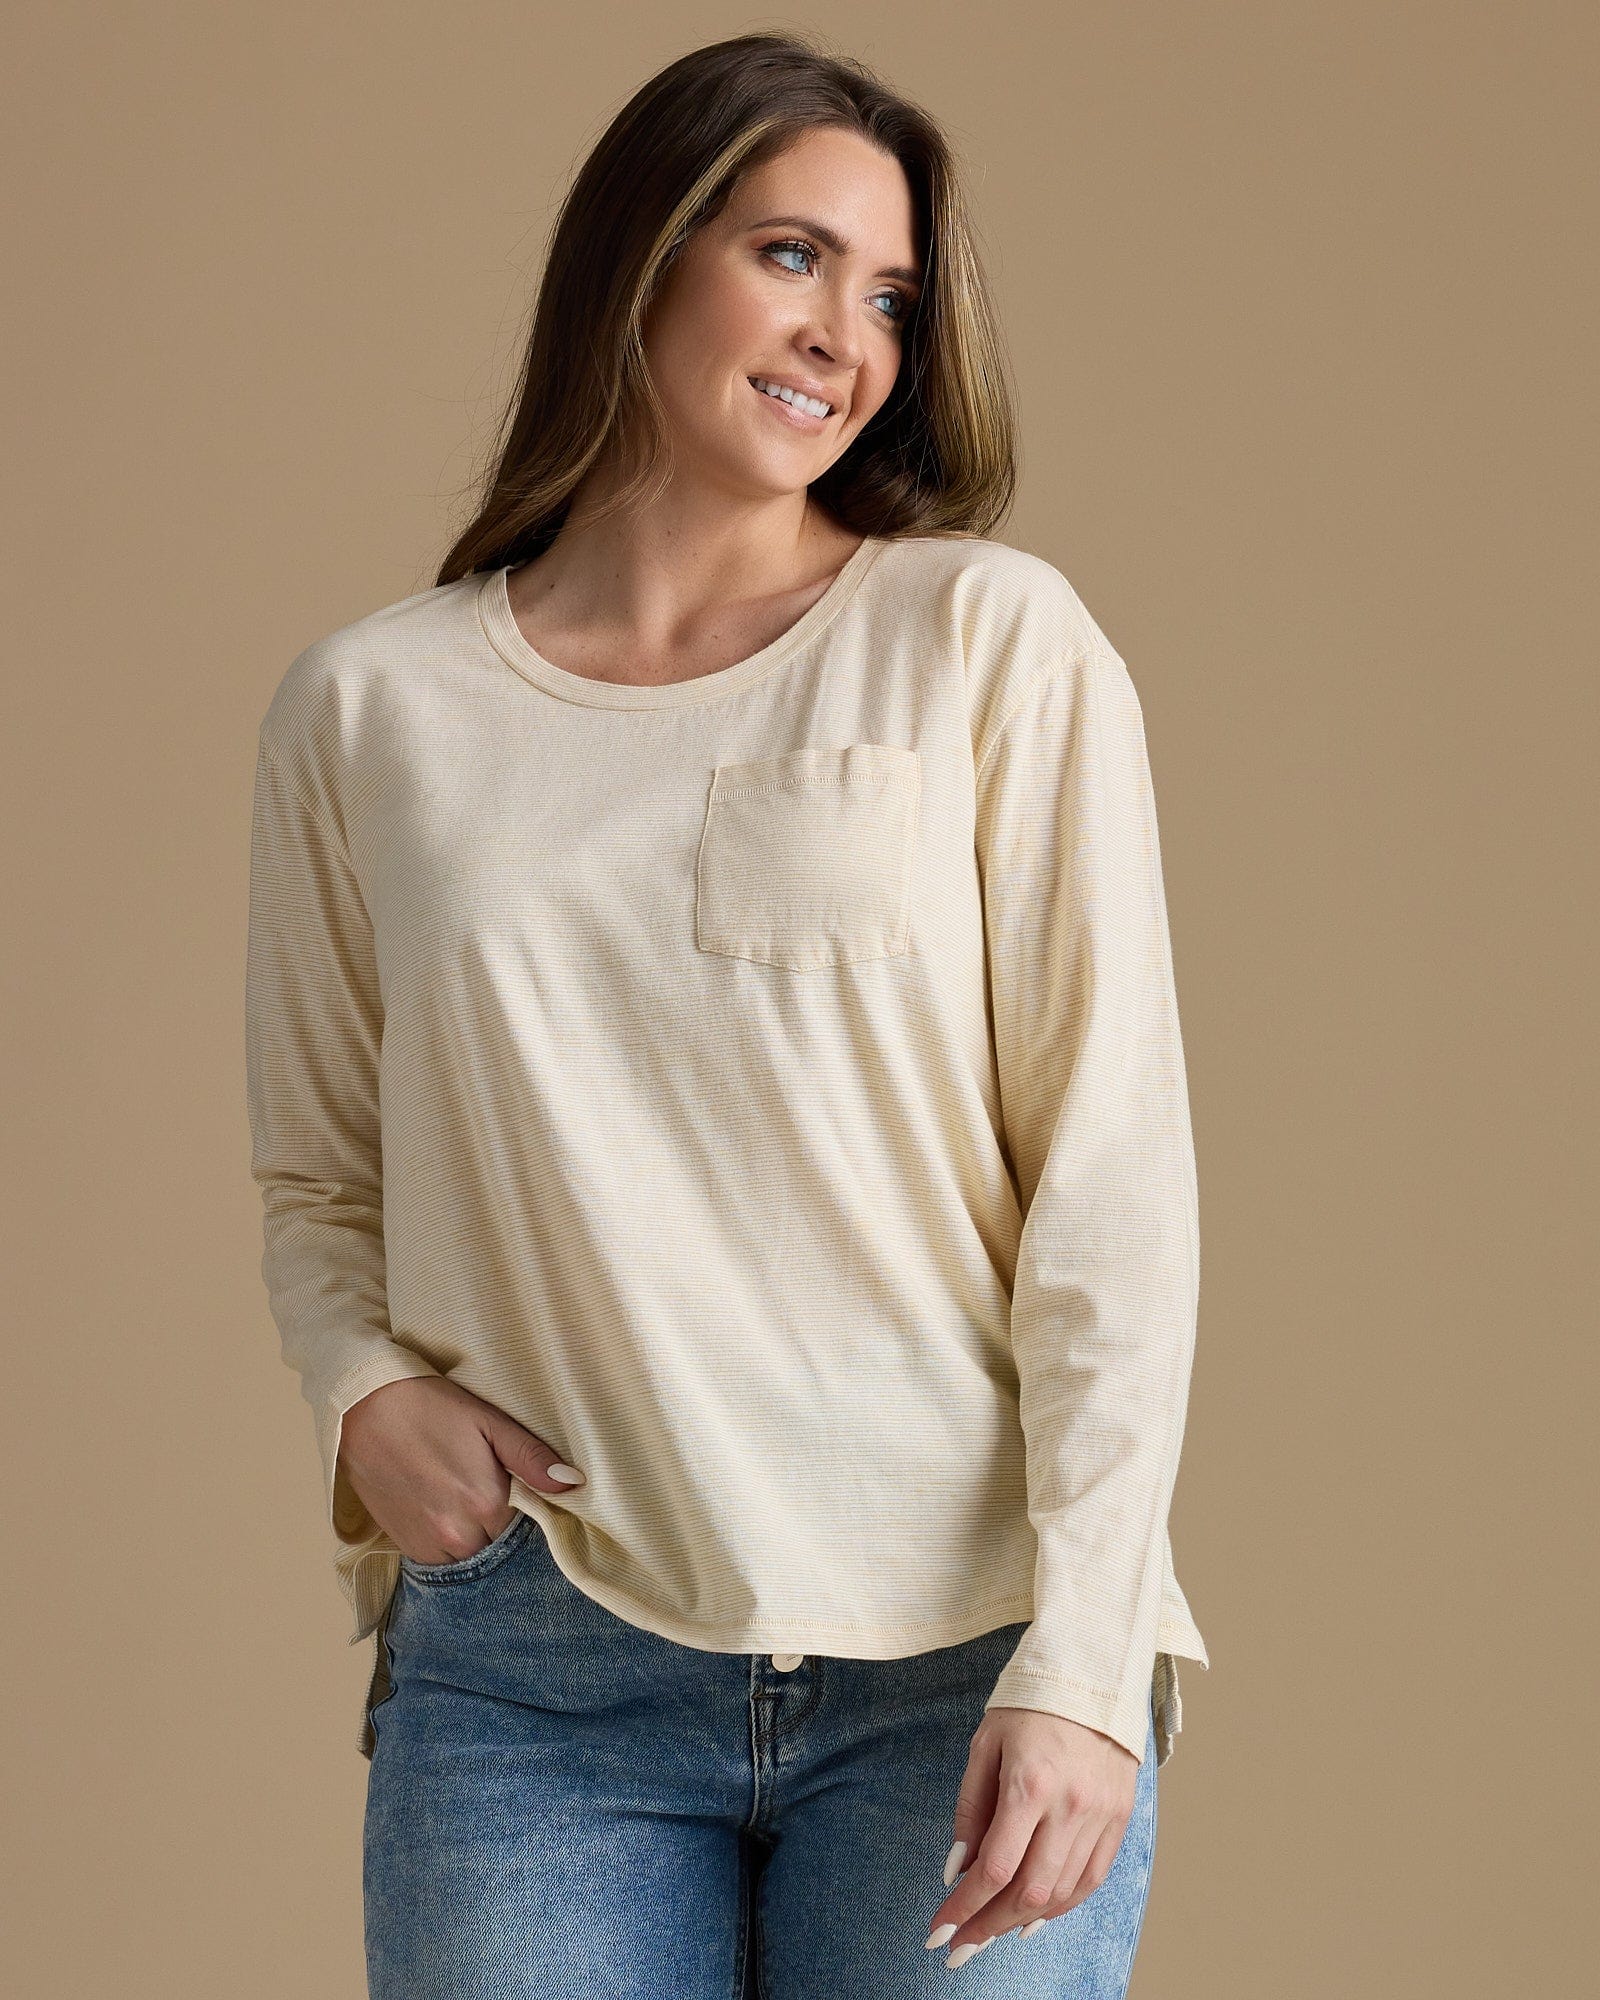 Woman in a tan long sleeve tshirt